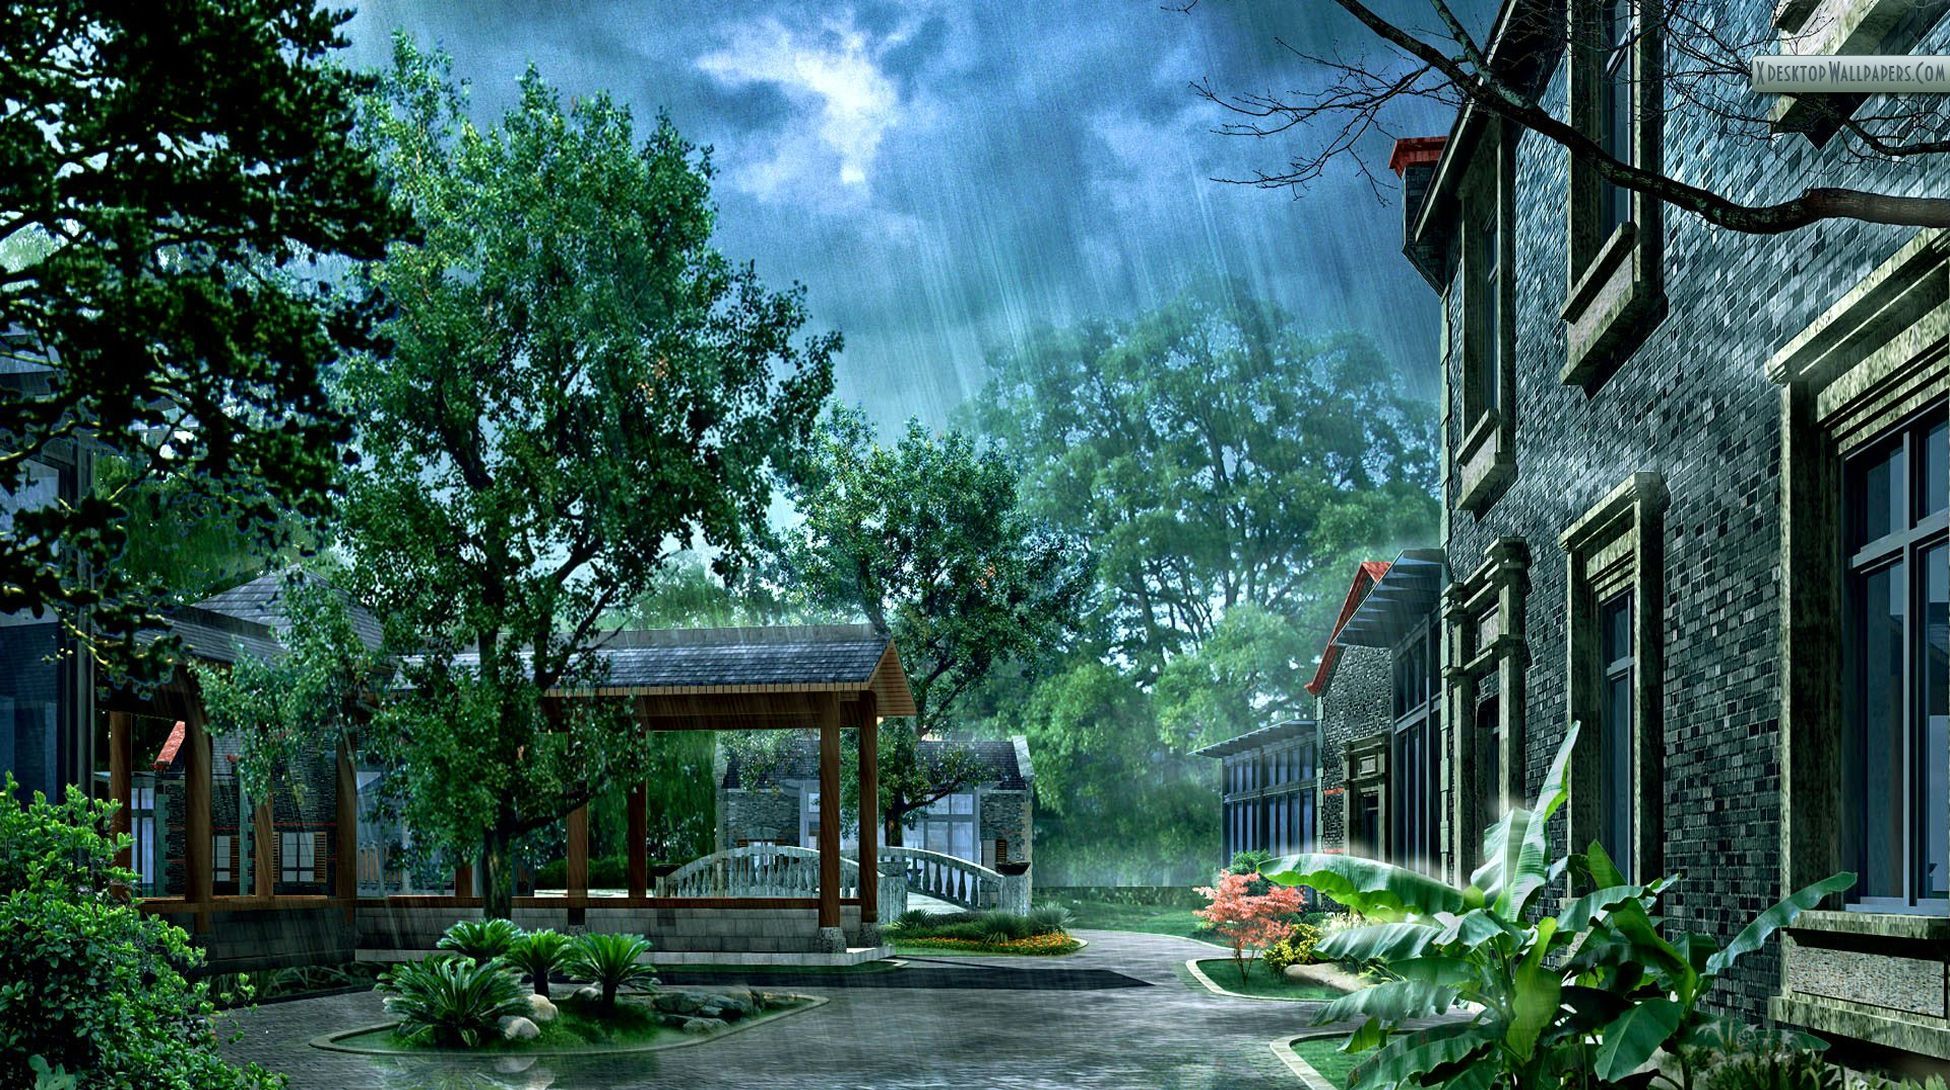 Beautiful Rainy Day HD Wallpaper for Desktop. Pakistani Fun. Rain wallpaper, Rainy day wallpaper, Landscape wallpaper